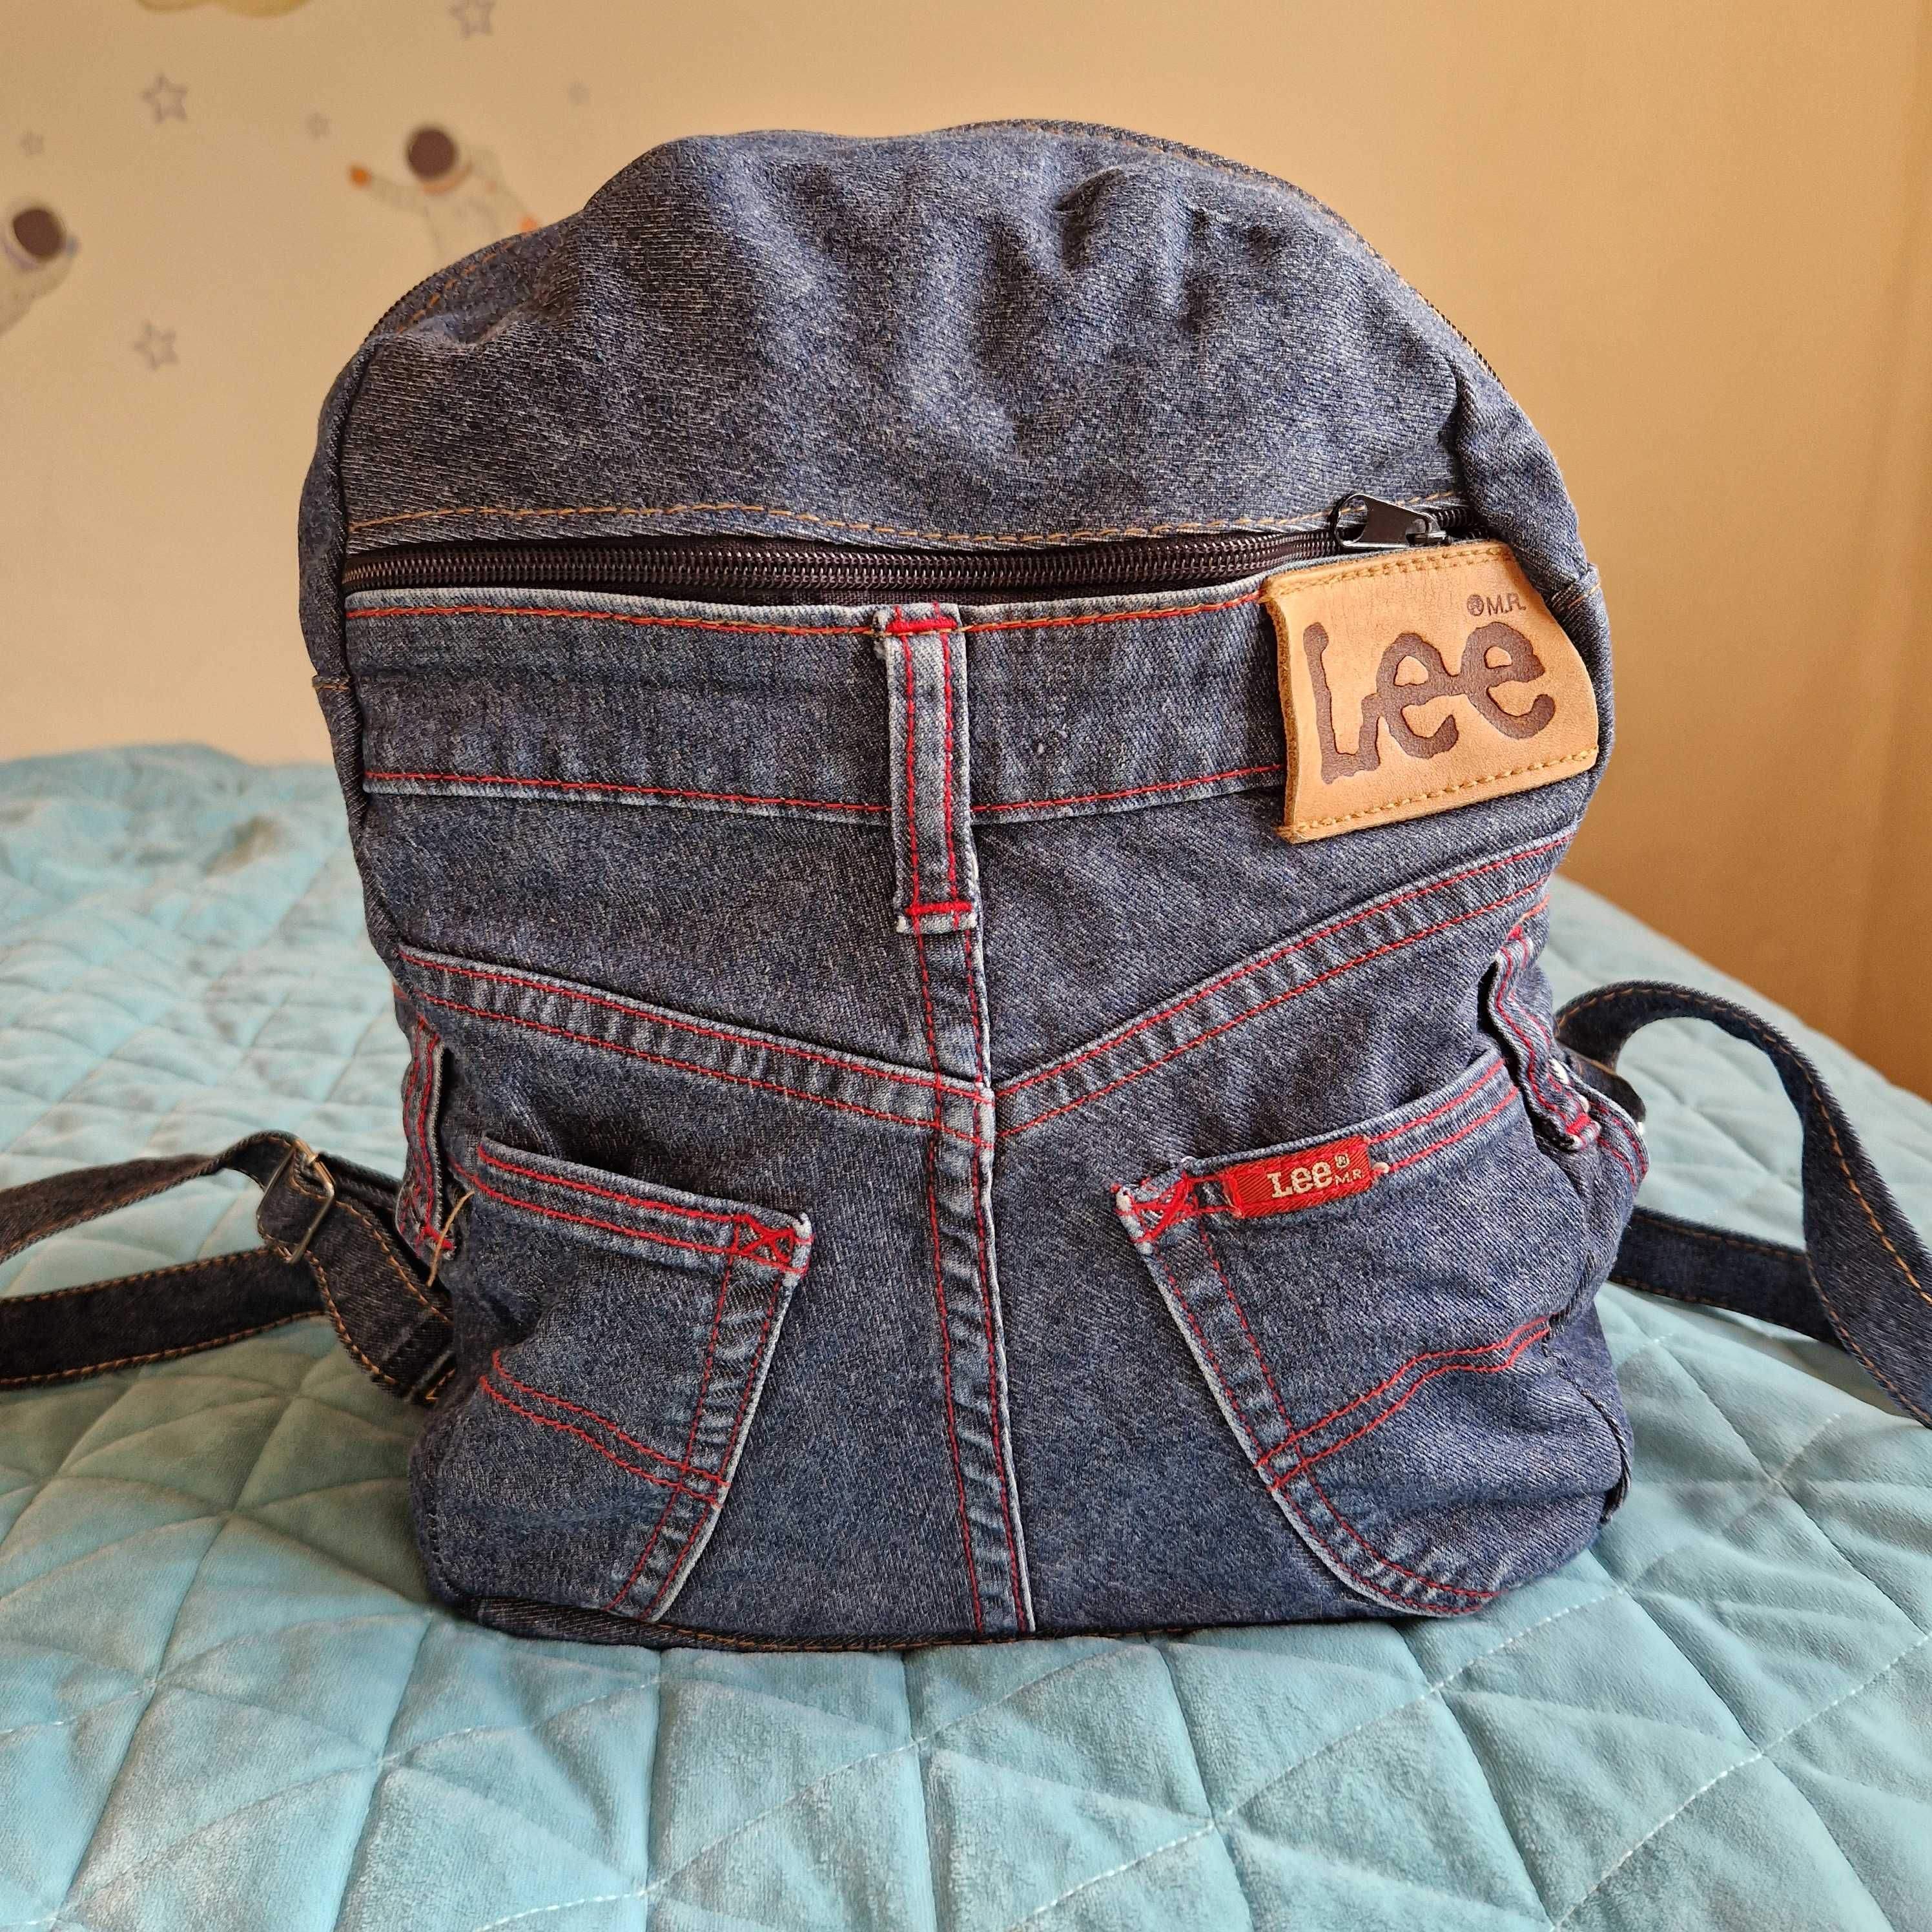 Plecak z jeansu handmade